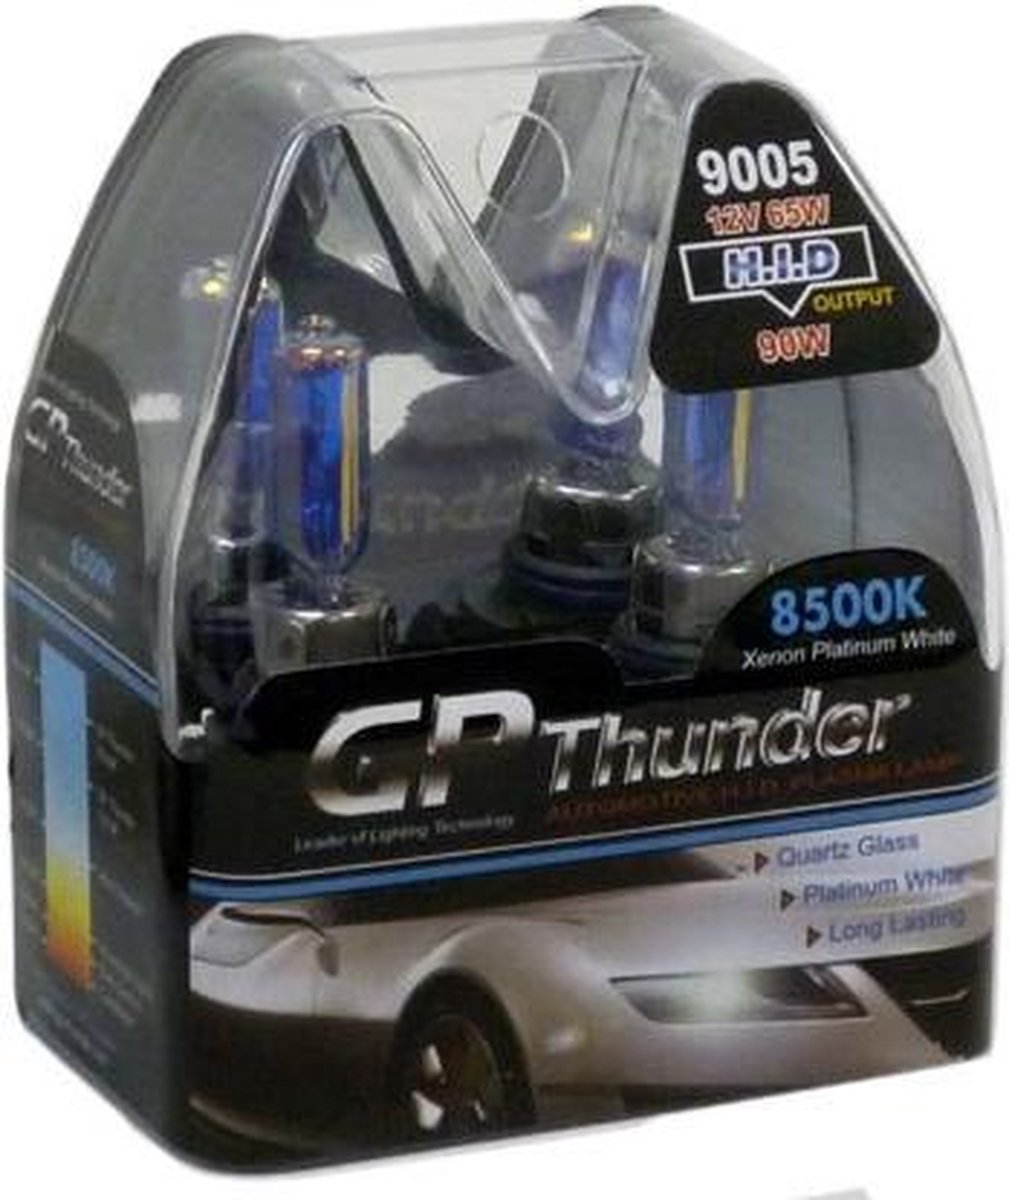 GP Thunder 8500k HB3 / 9005 65w Xenon Blue Xenon Look